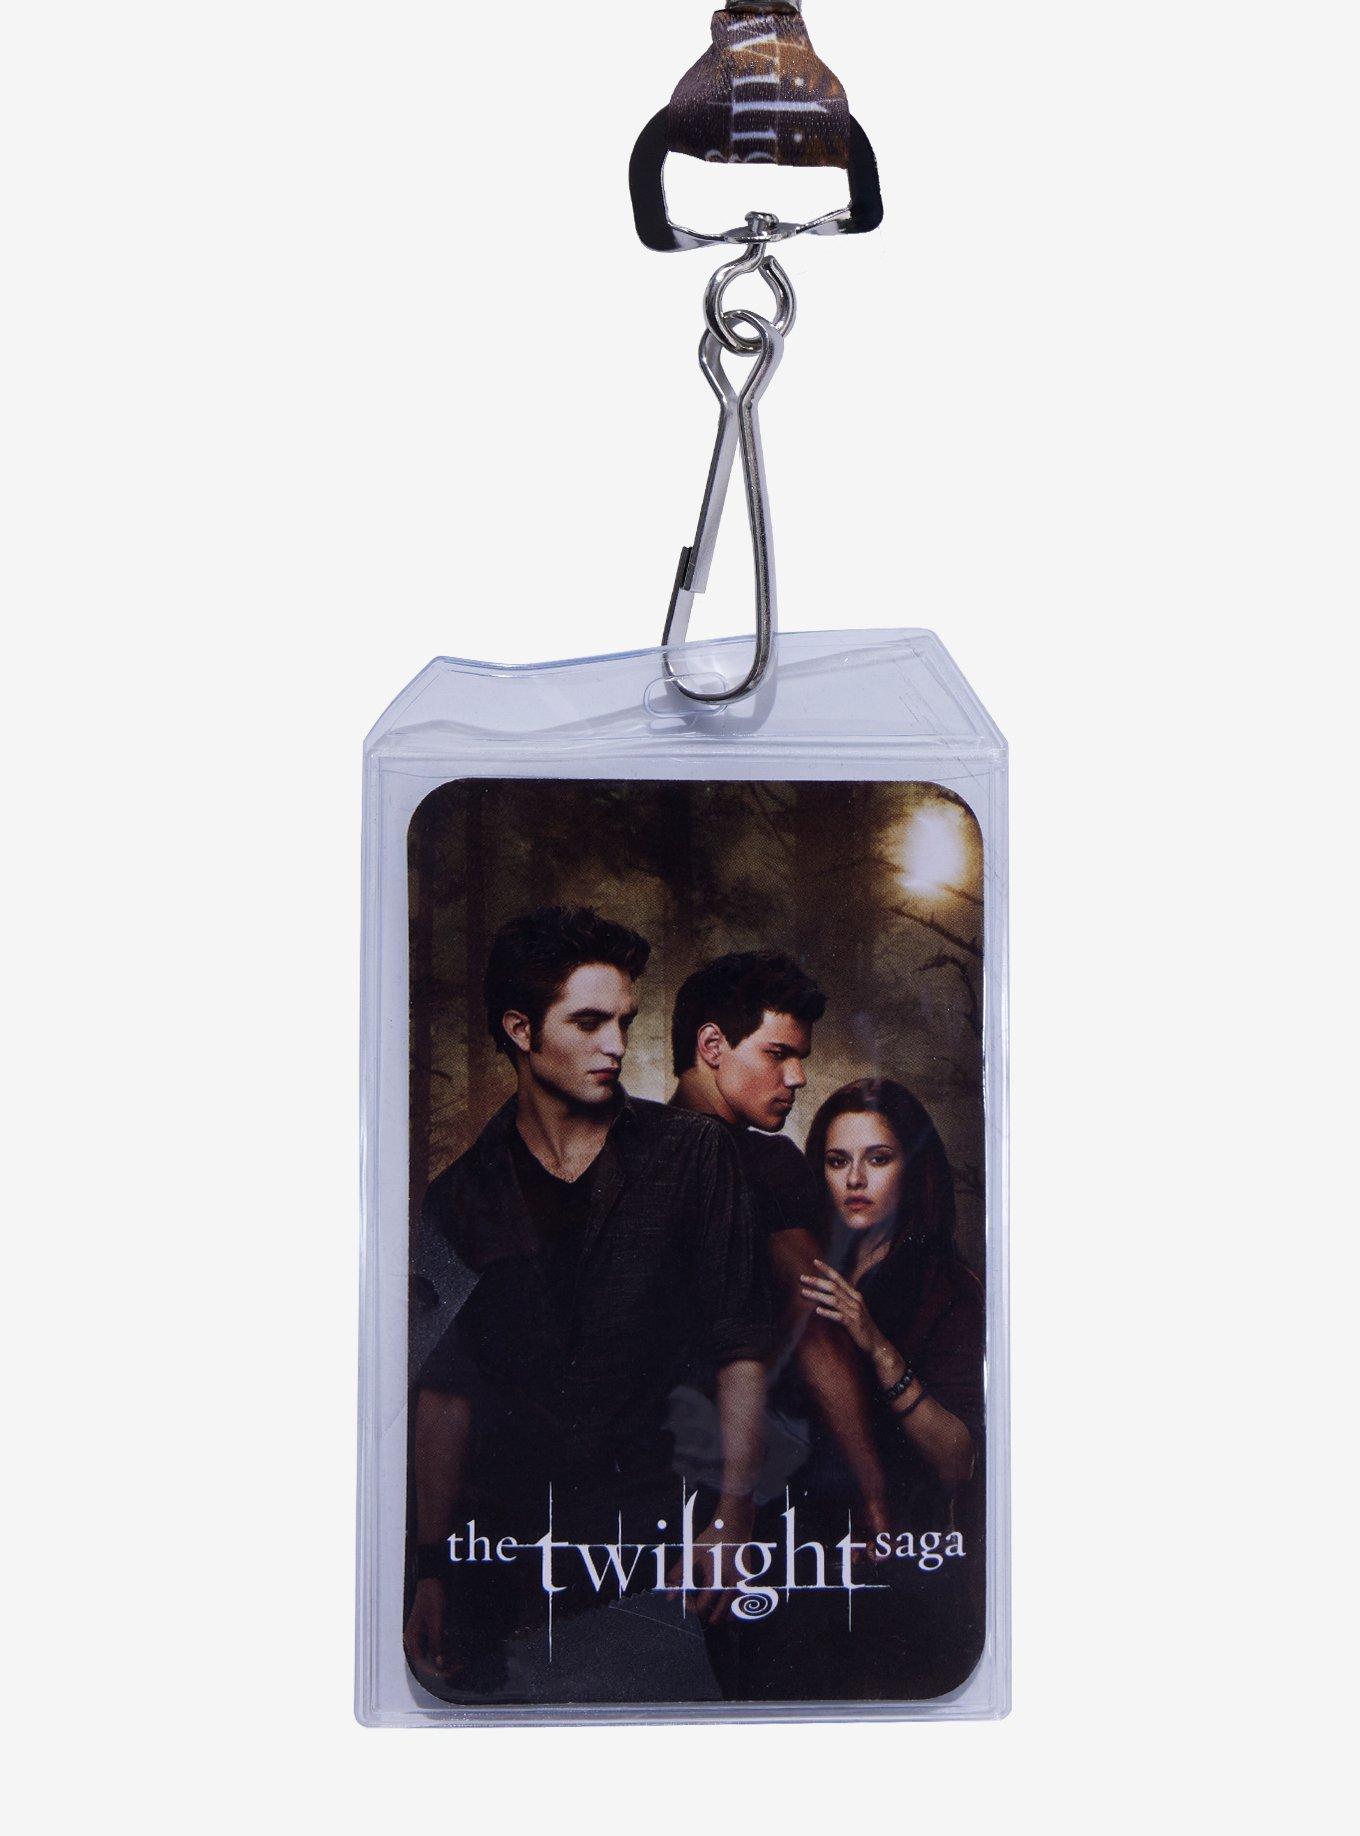 Hottopic Twilight saga Keychain. #twilightmerch #hottopic #keychain